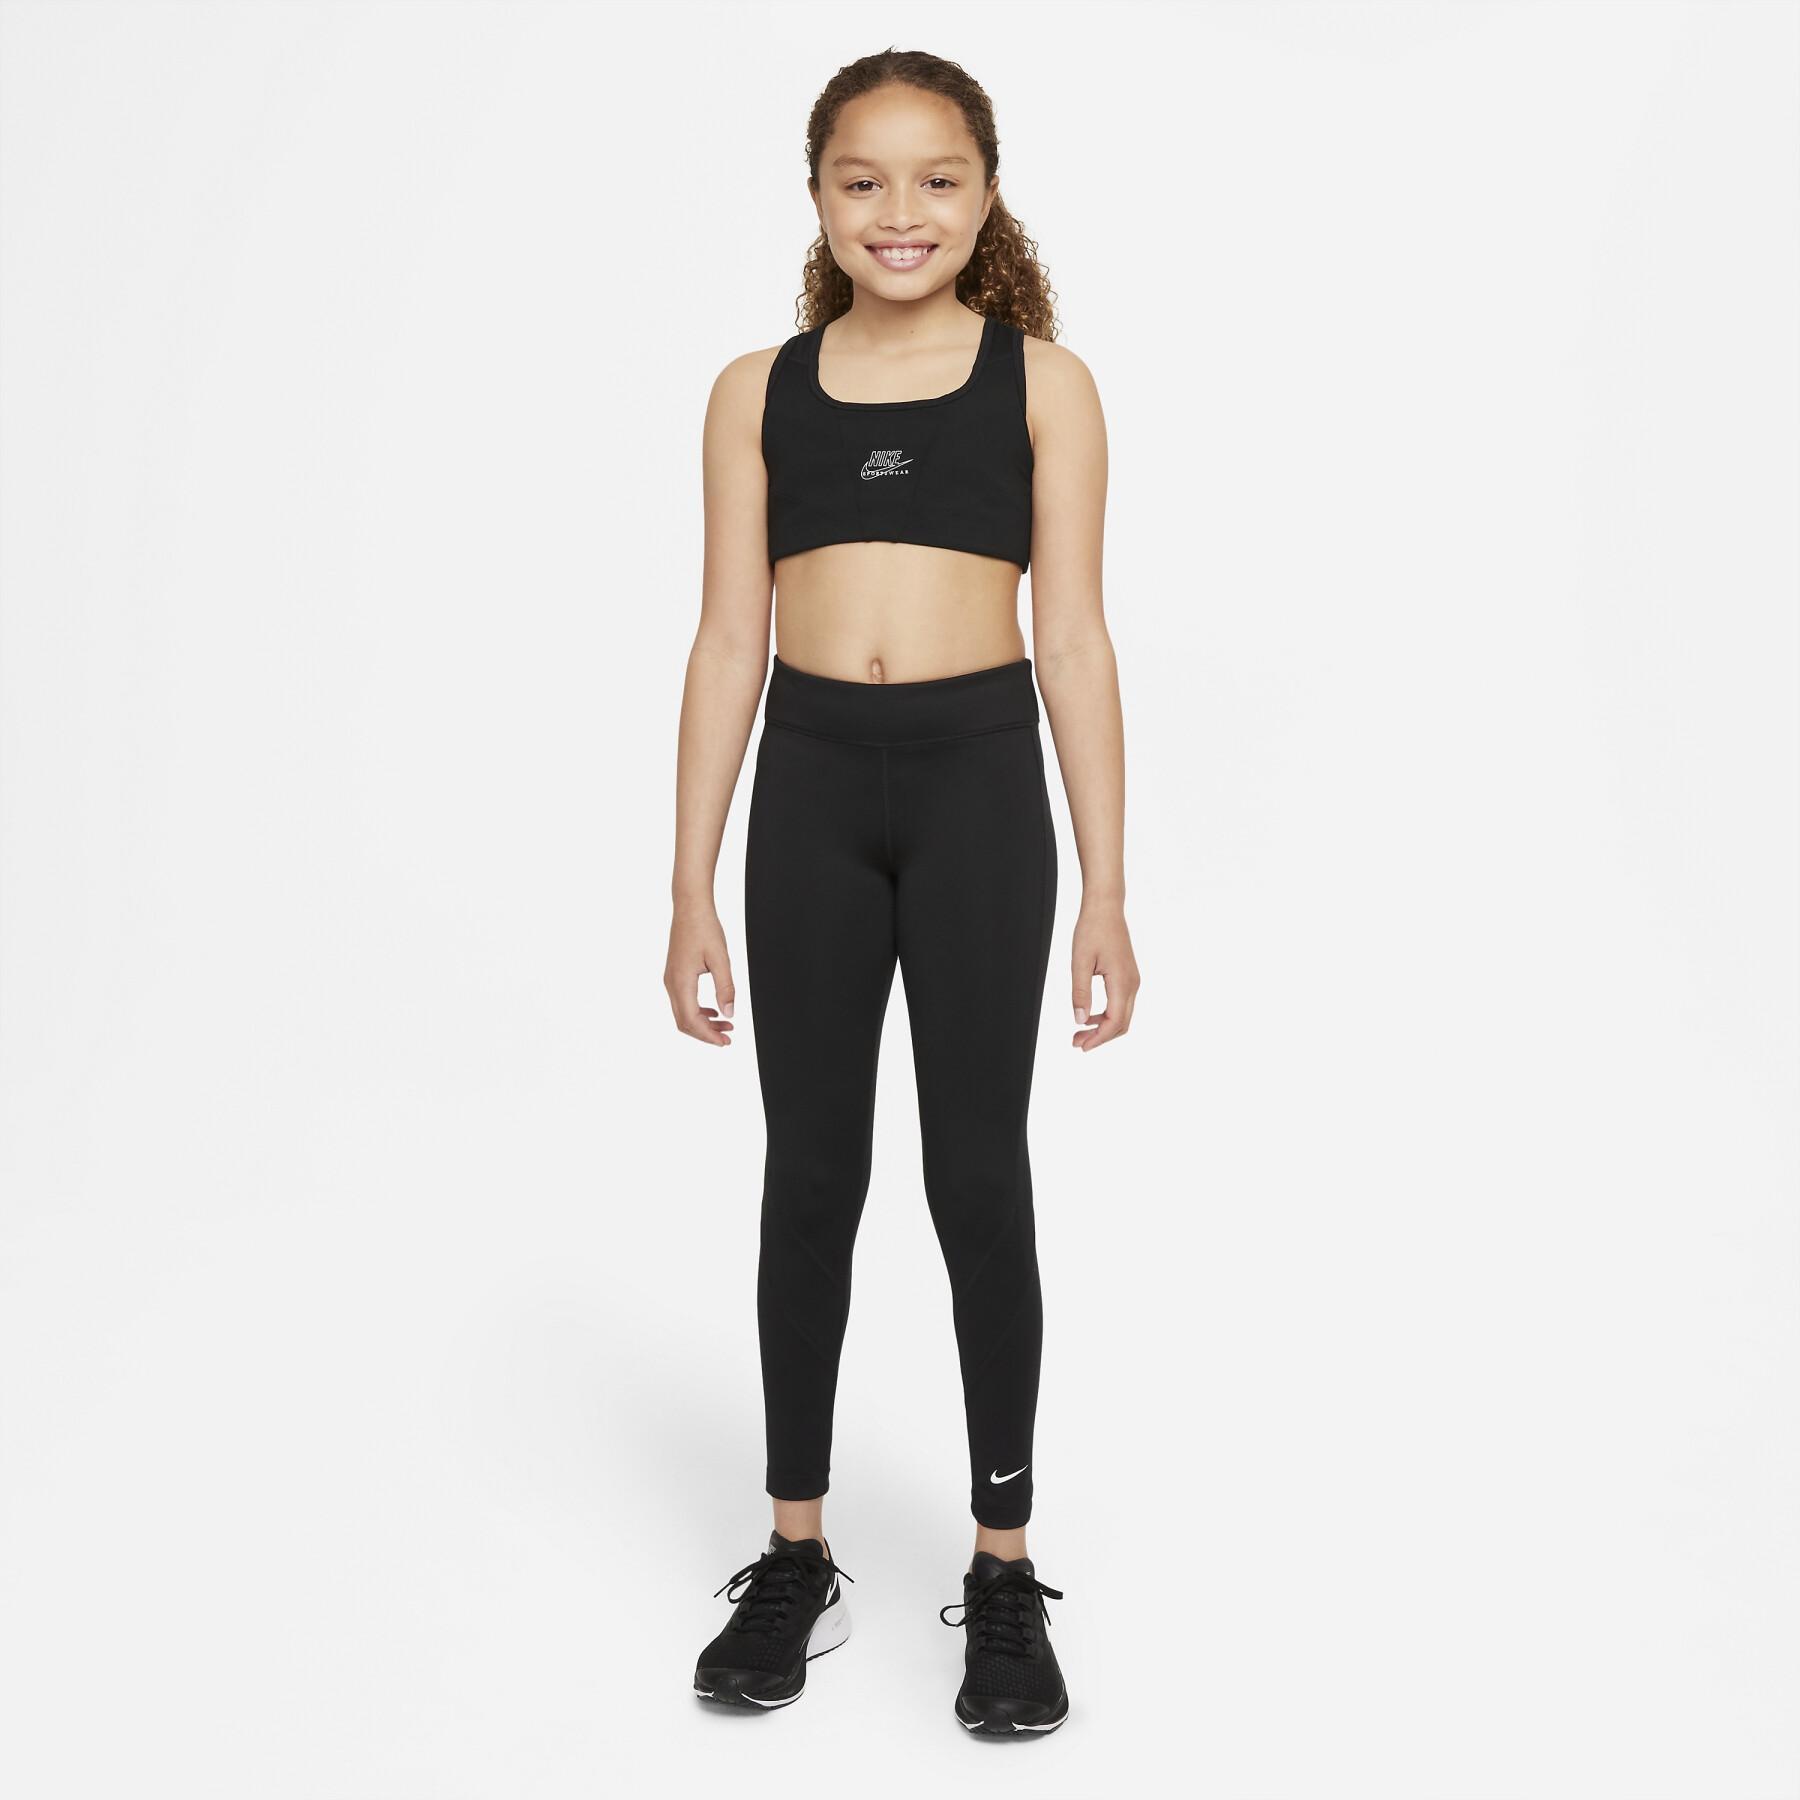 Legging fille Nike One - Pantalons & Jeans - Vêtements - Enfants